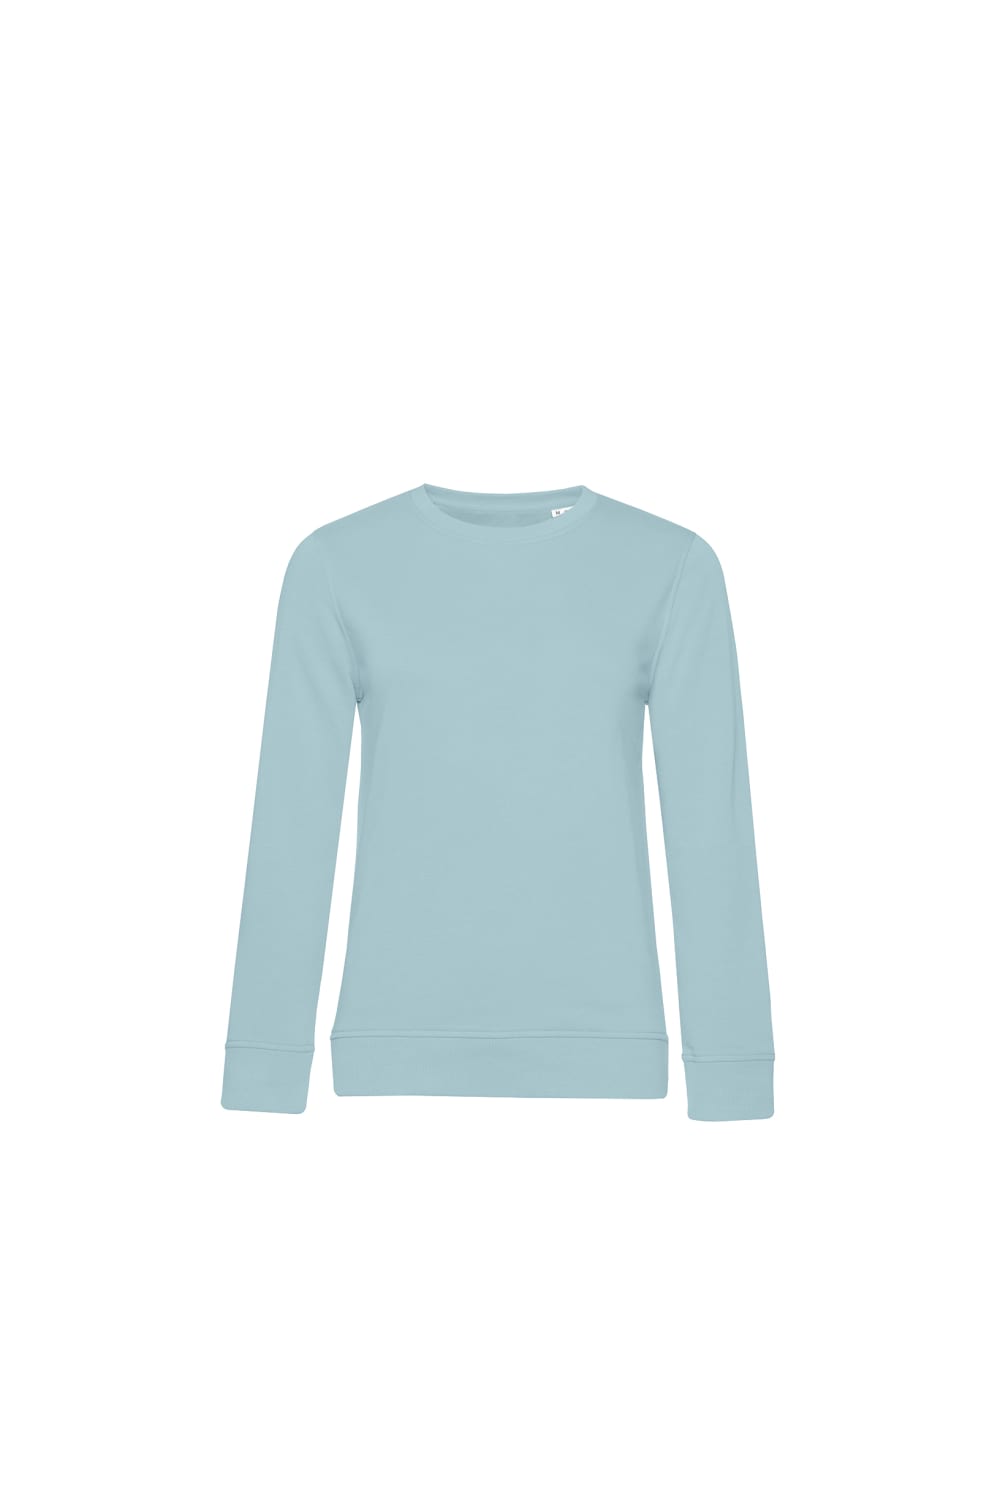 B&C Womens/Ladies Organic Sweatshirt (Duck Egg Blue)